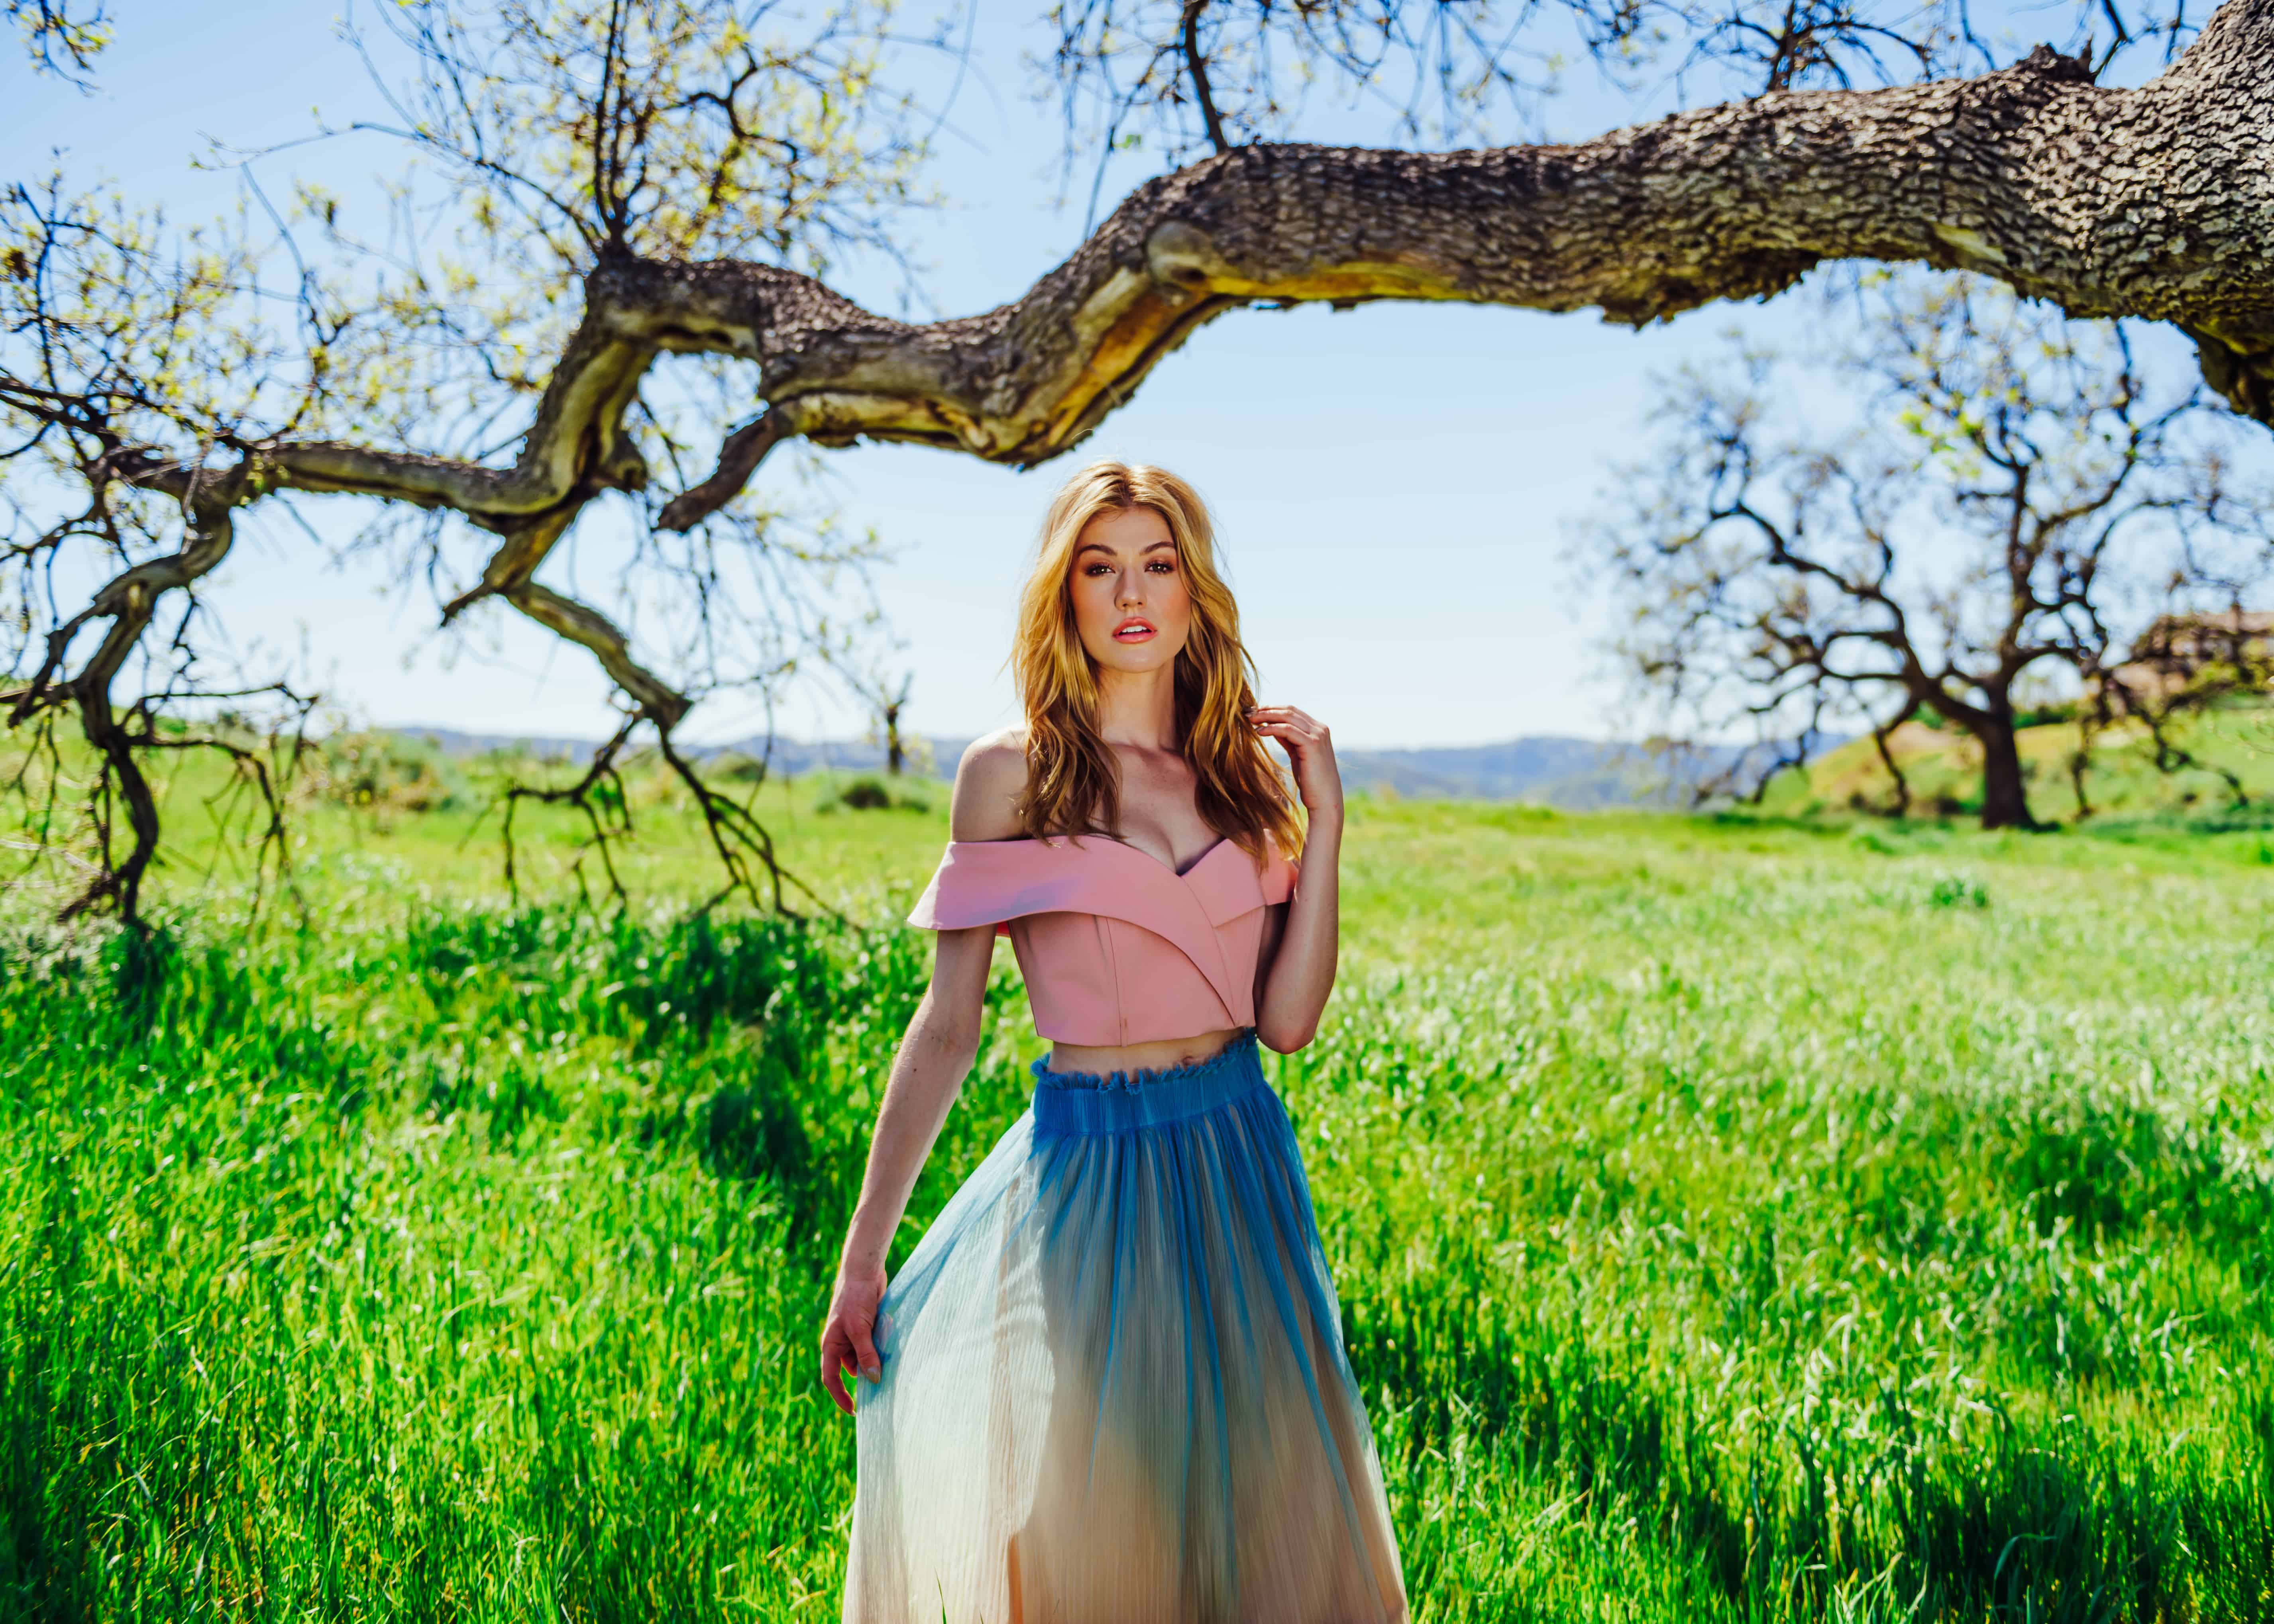 A girl in a light skirt against a green field